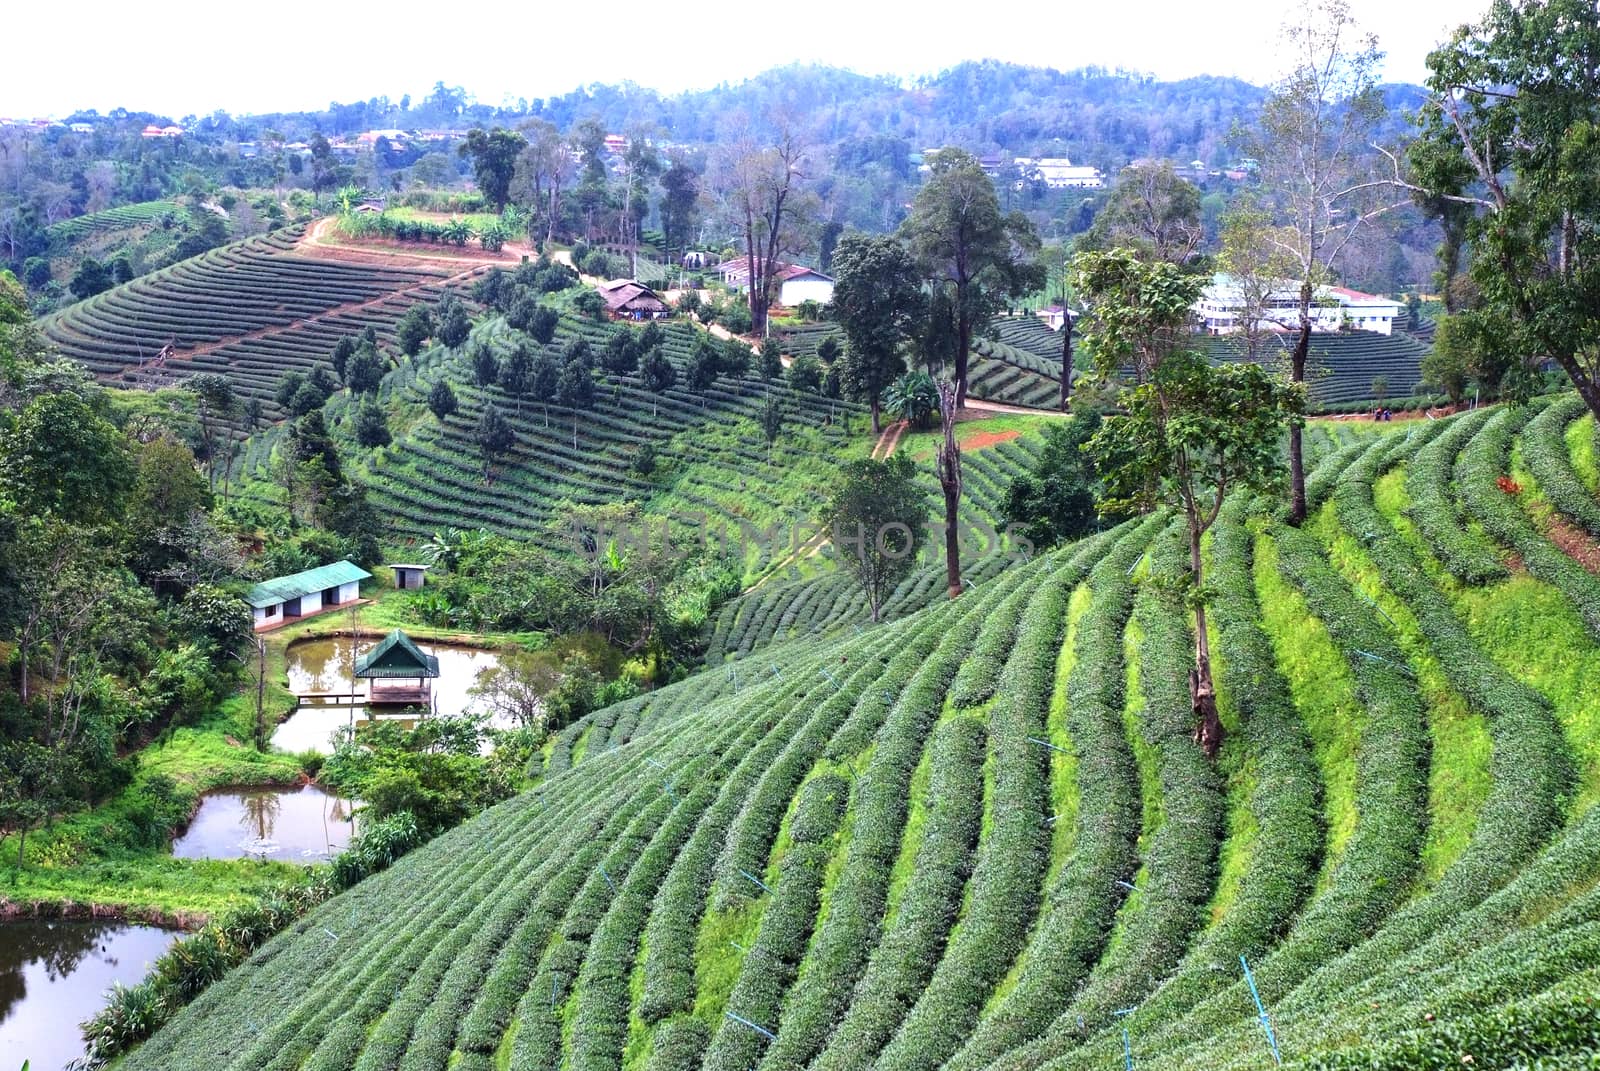 Tea Plantation Landscape 11 by ideation90